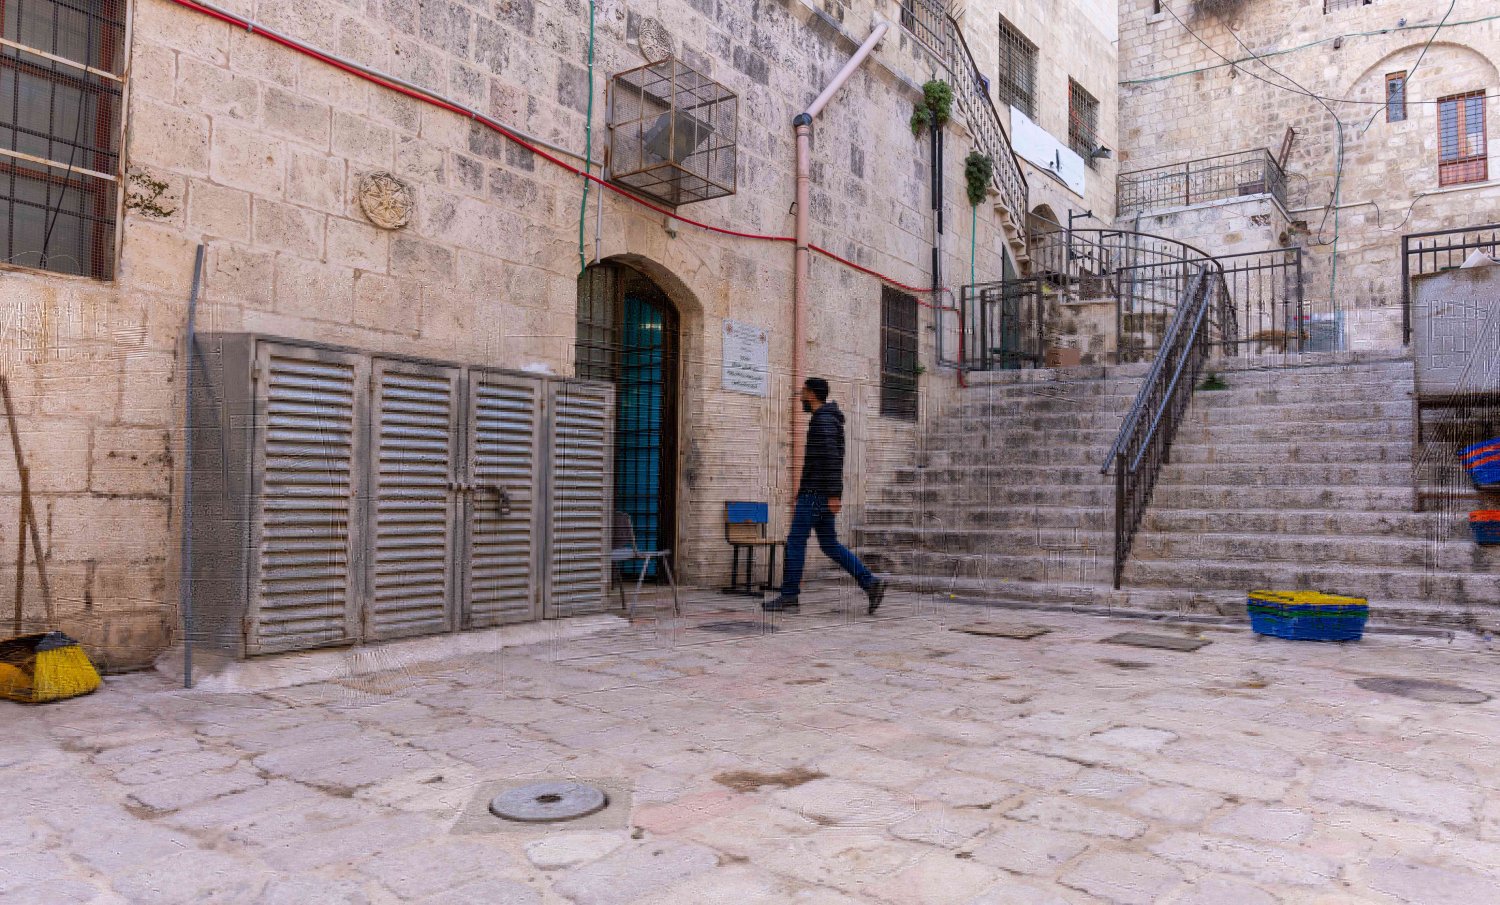 The public entrance to the Khaski Sultan soup kitchen in the Old City of Jerusalem